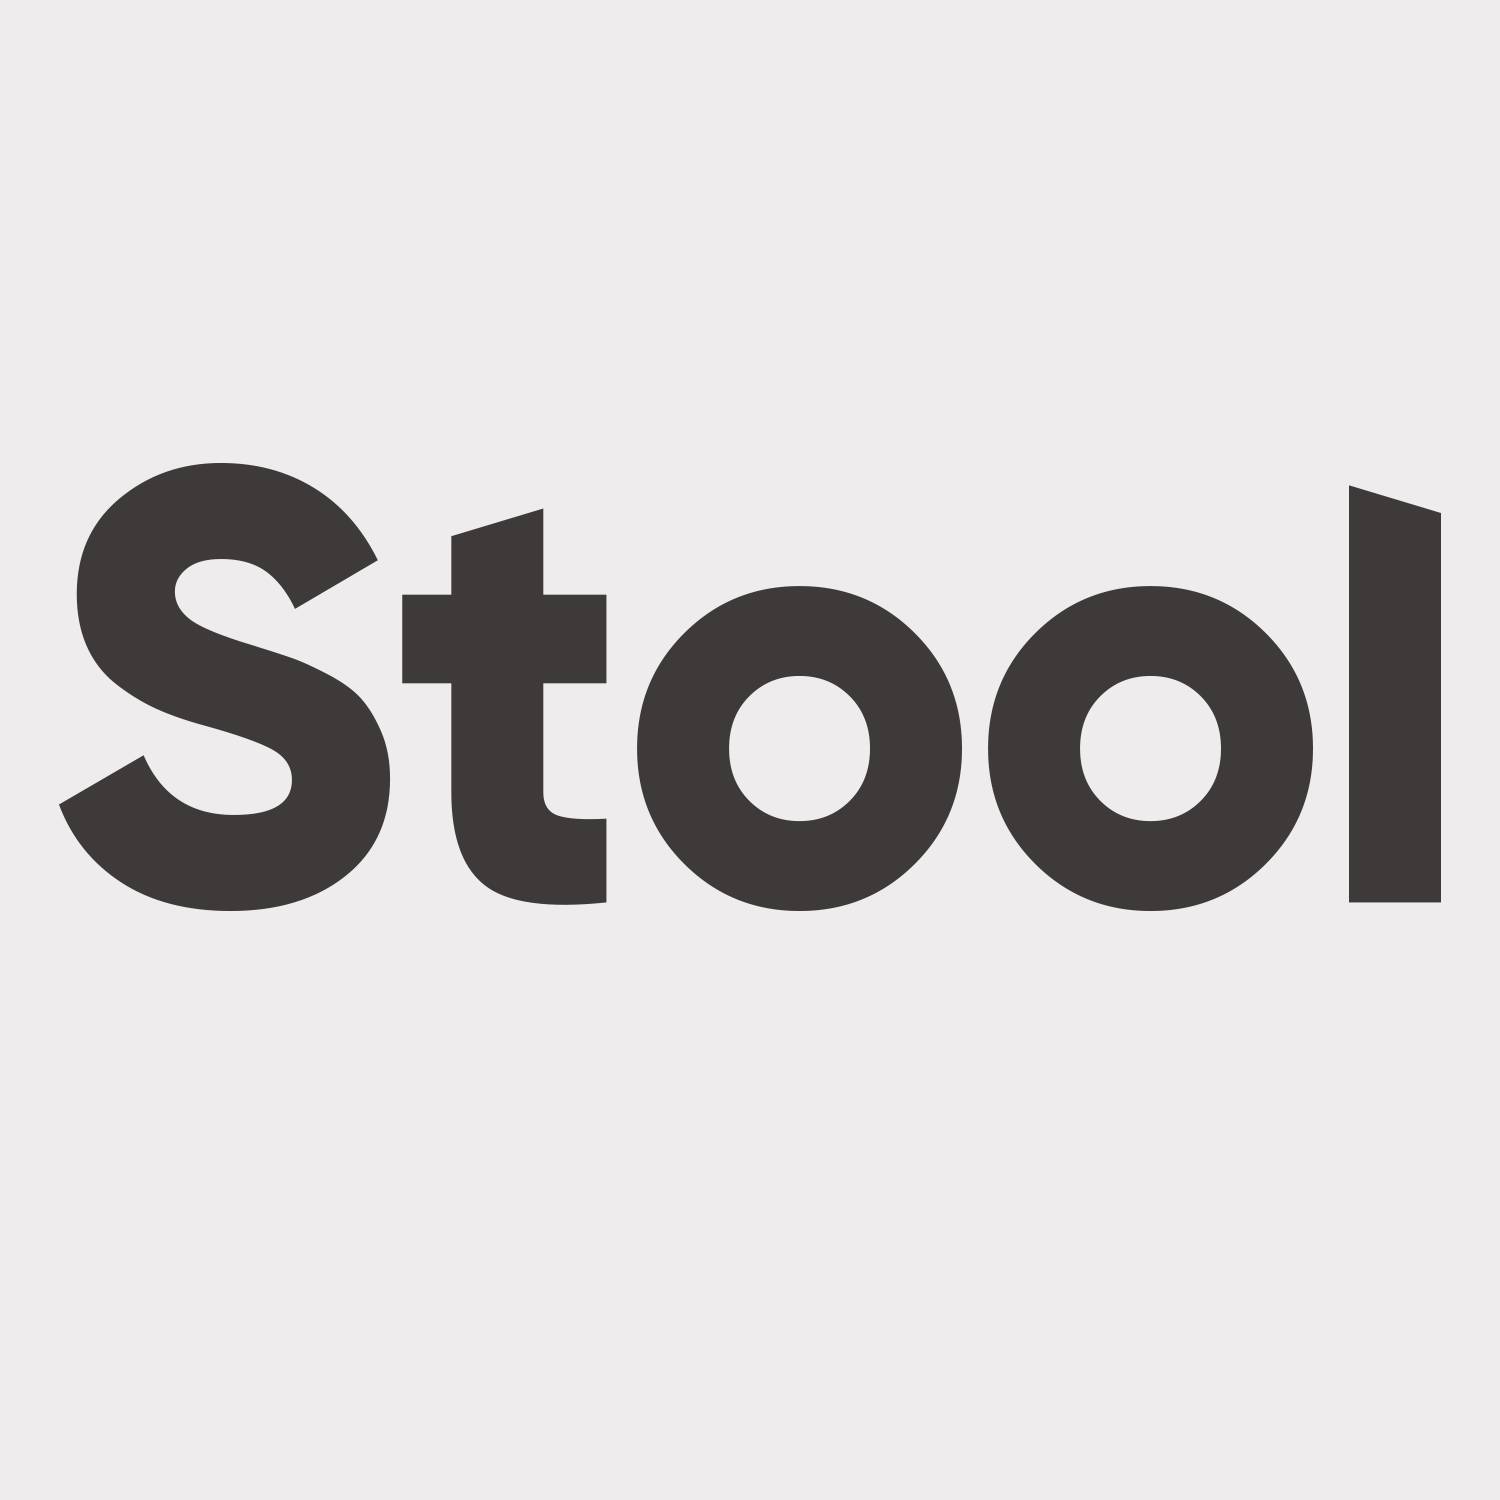 Иконка канала Stool Group